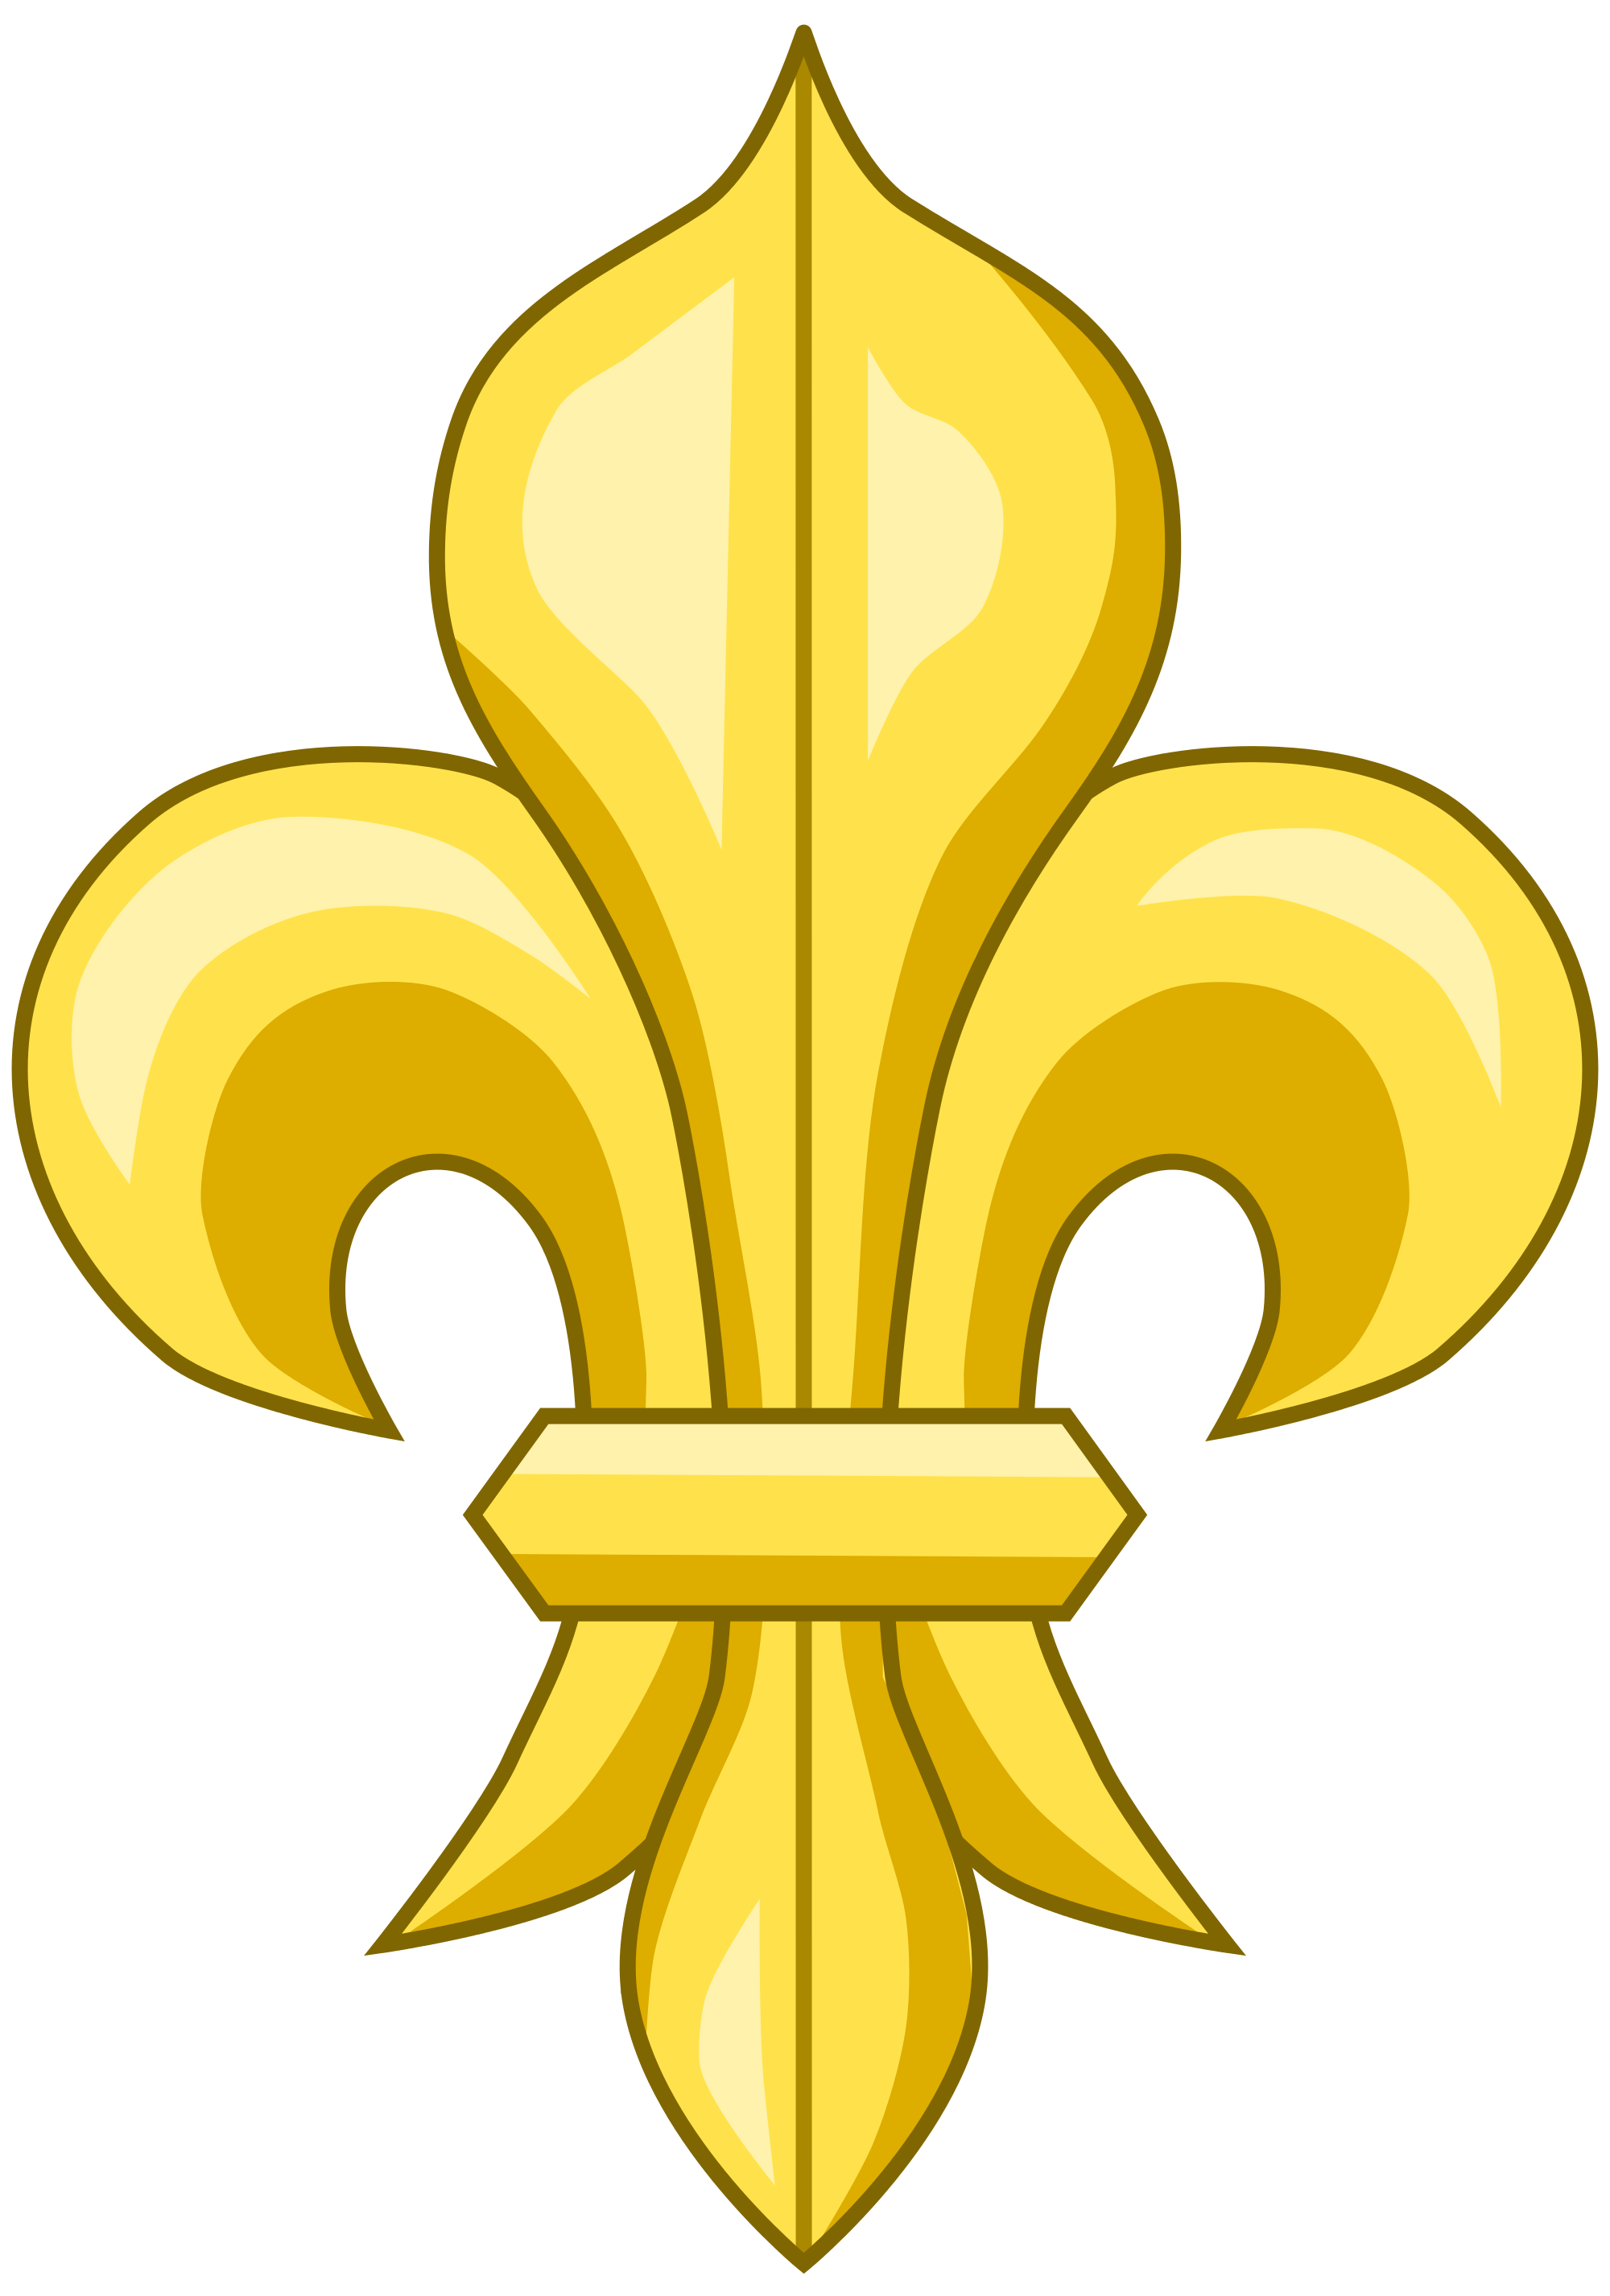 French heraldry - Wikipedia, the free encyclopedia